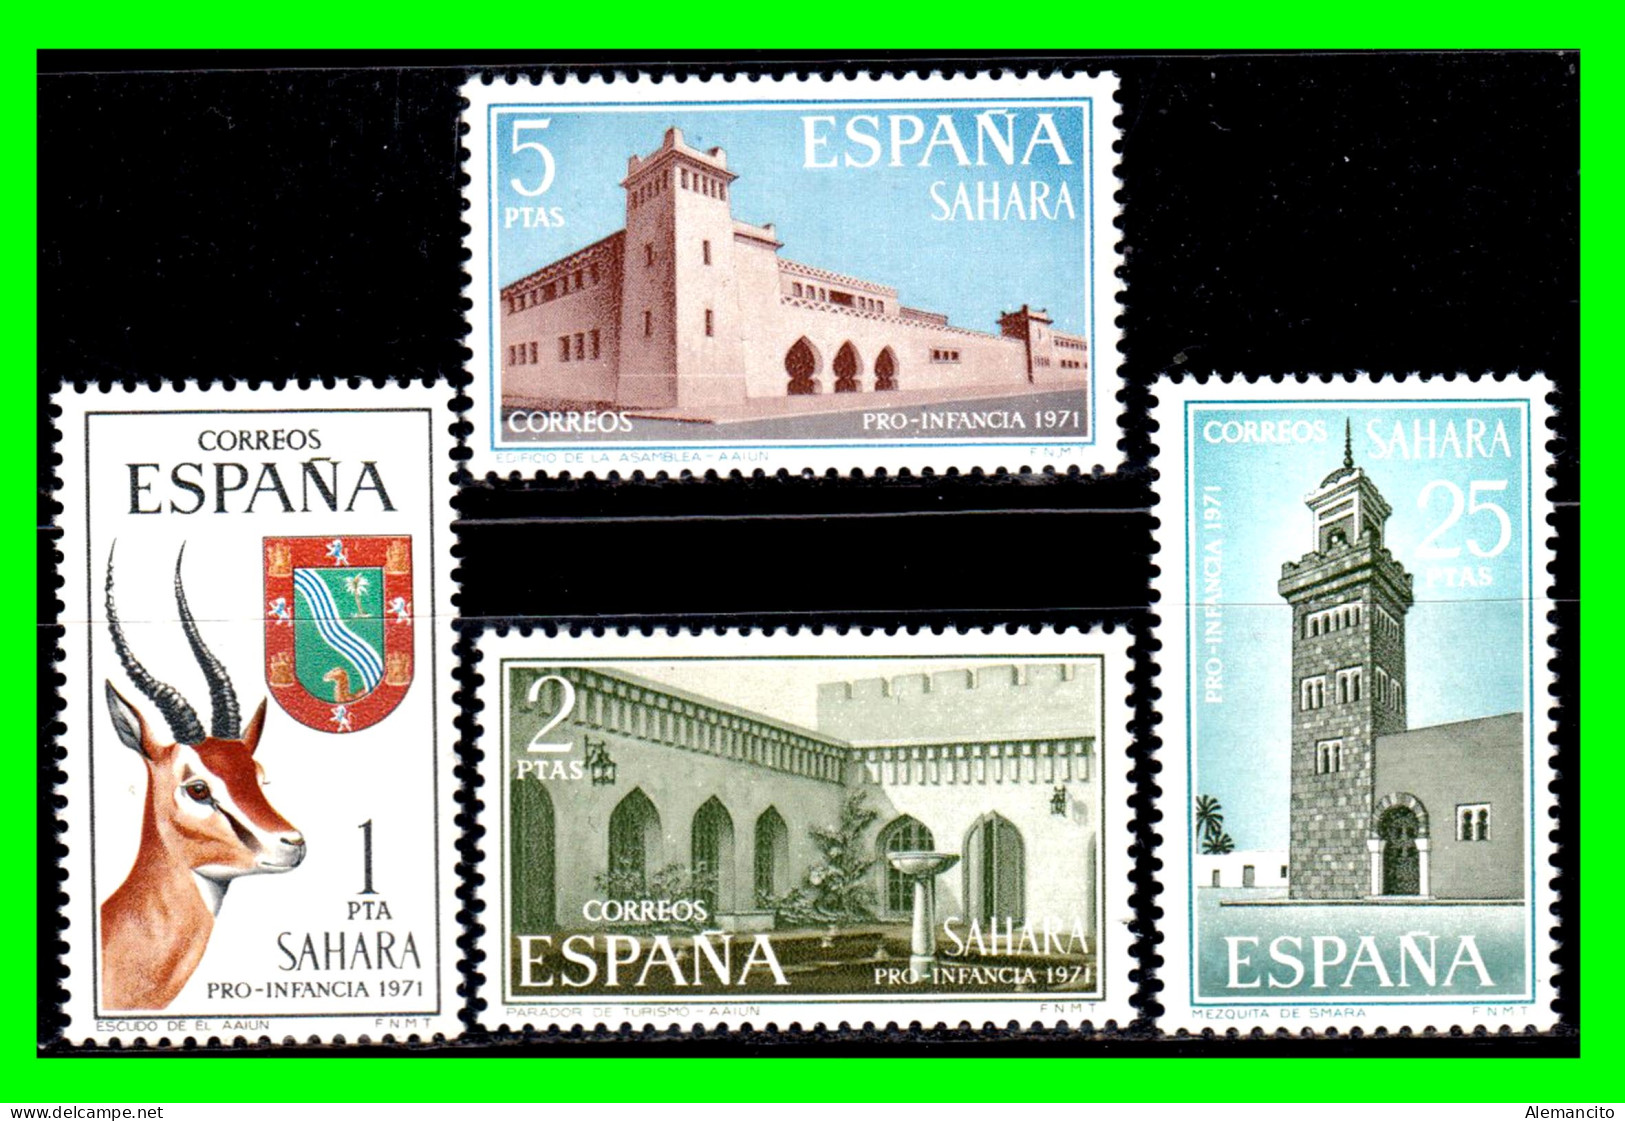 ESPAÑA COLONIAS ESPAÑOLAS ( SAHARA ESPAÑOL AFRICA ) SERIE DE SELLOS AÑO 1971 -  PRO INFANCIA - NUEVOS - - Sahara Español